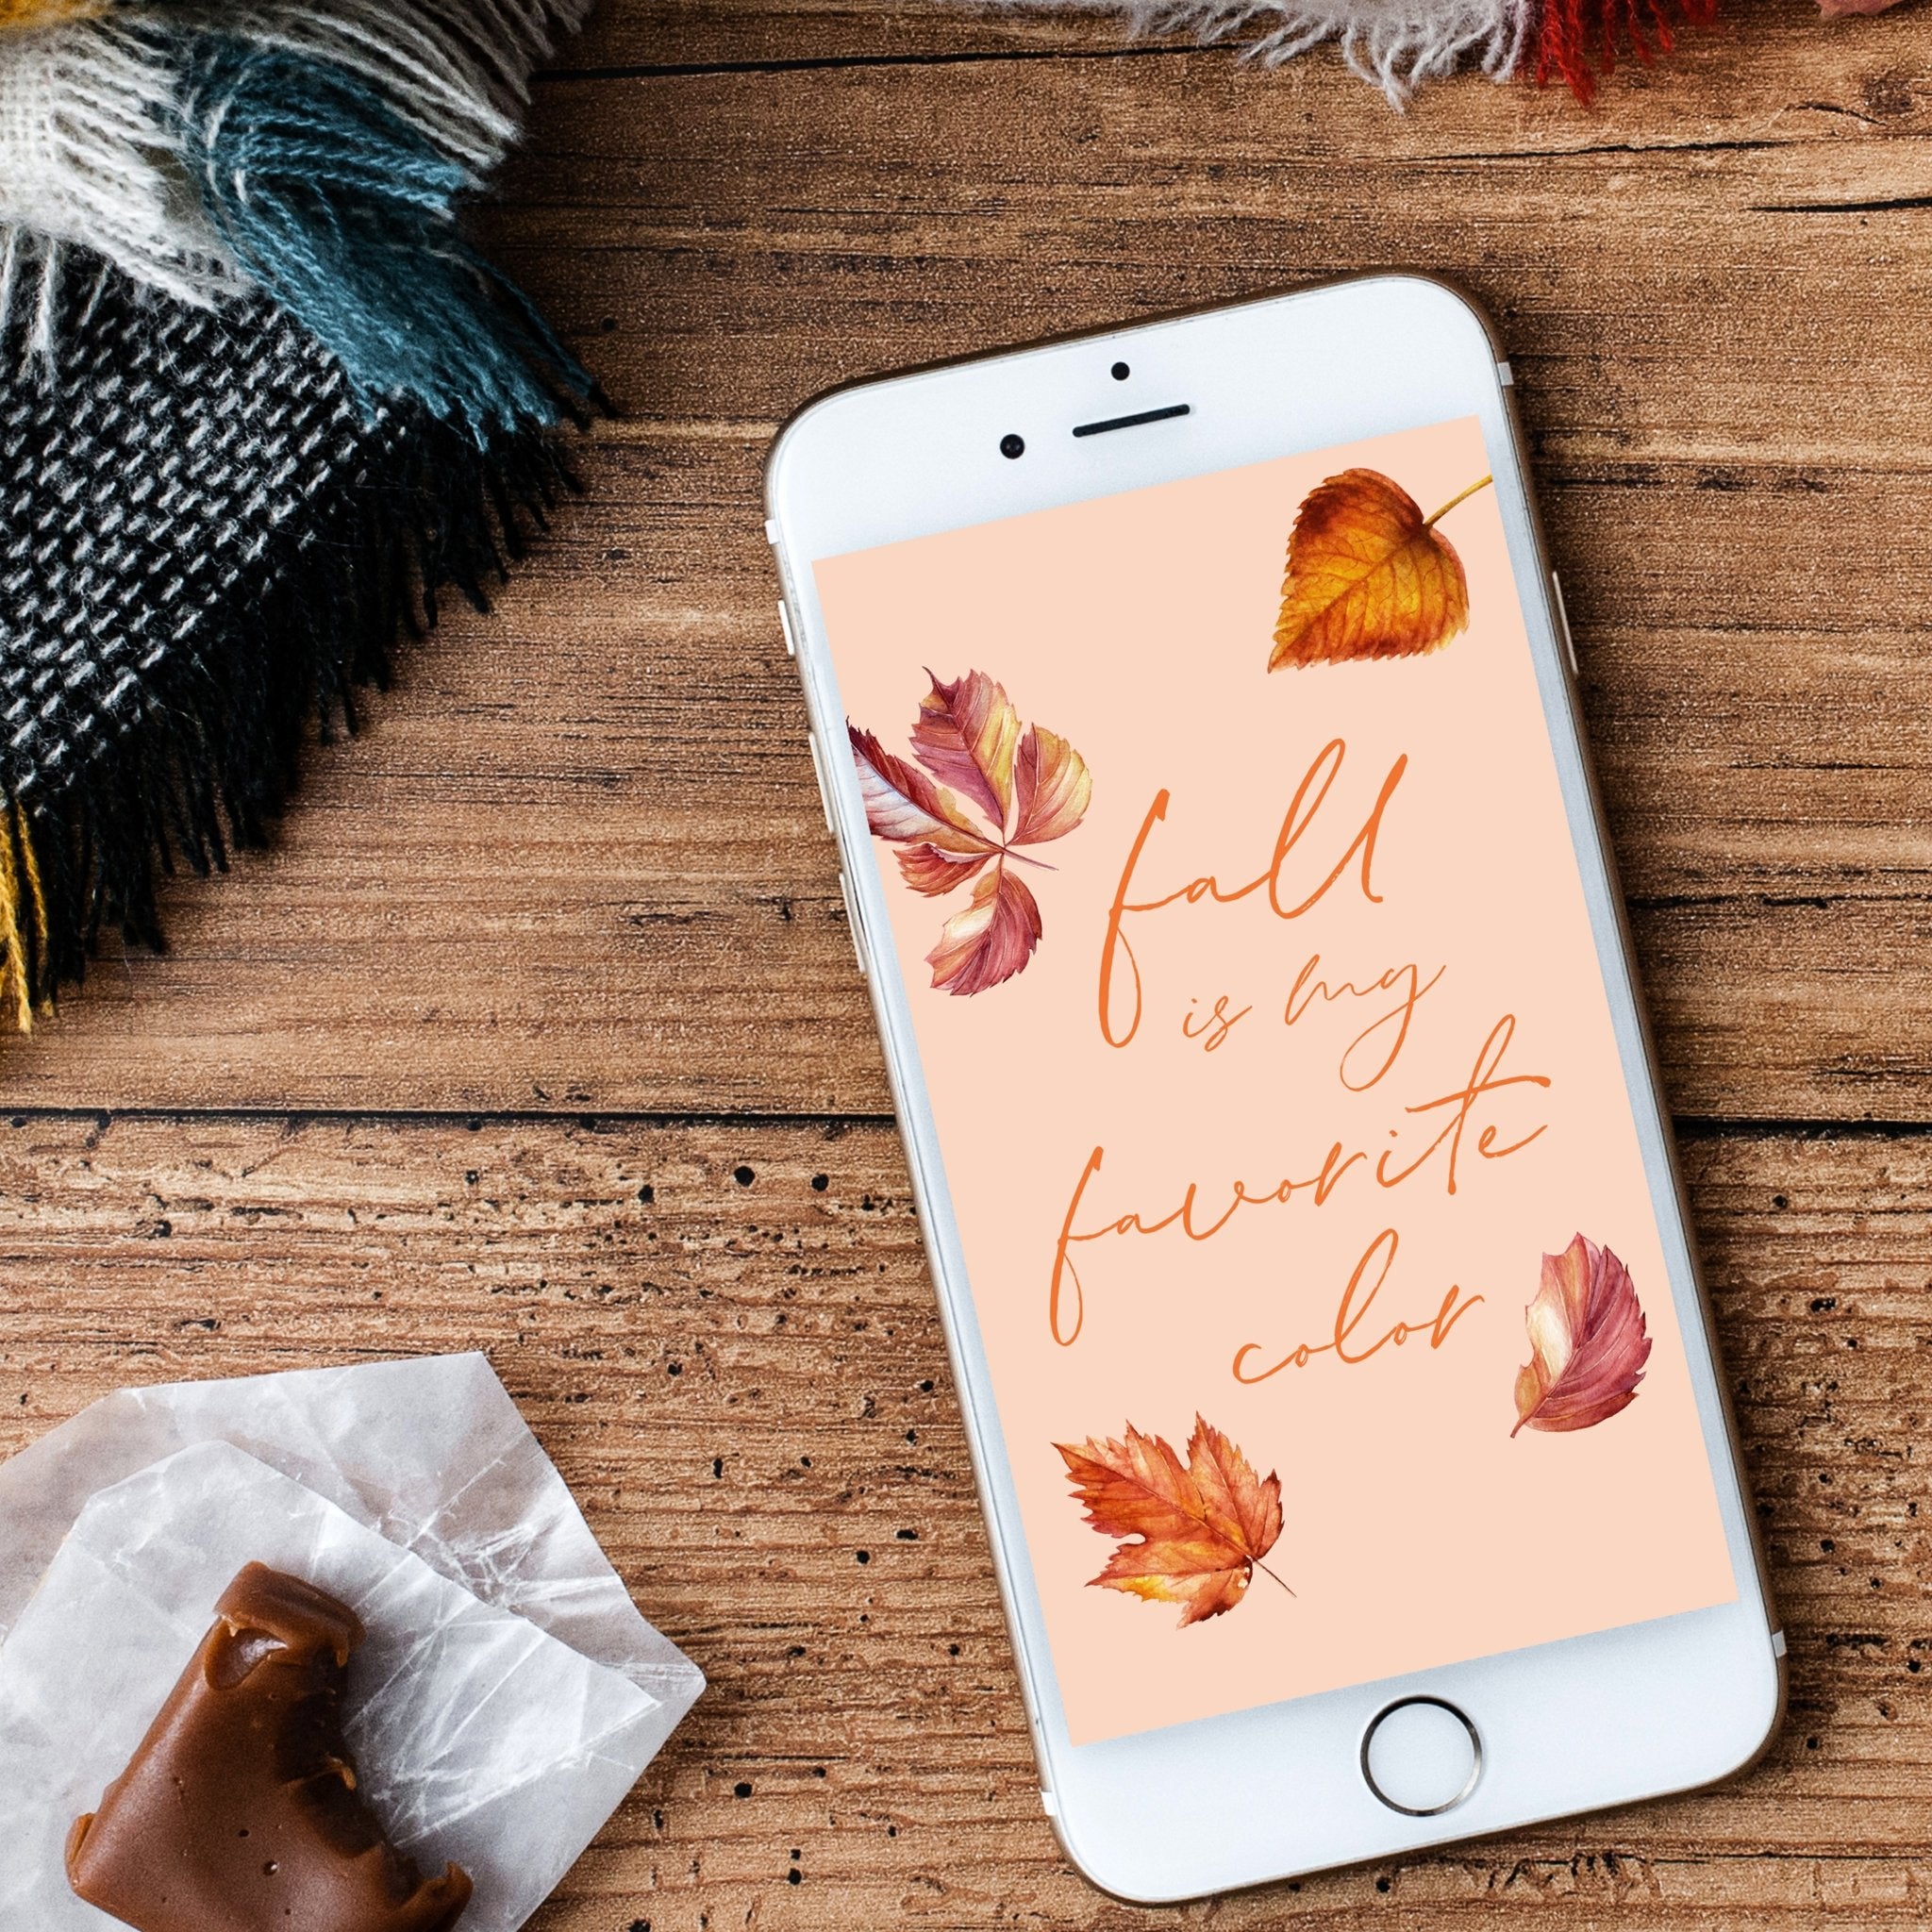 2019 Cute Wallpaper + Girly Wallpaper {FREE Pretty iPhone Backgrounds}   Wallpaper iphone cute, Free iphone wallpaper, Pretty backgrounds for iphone